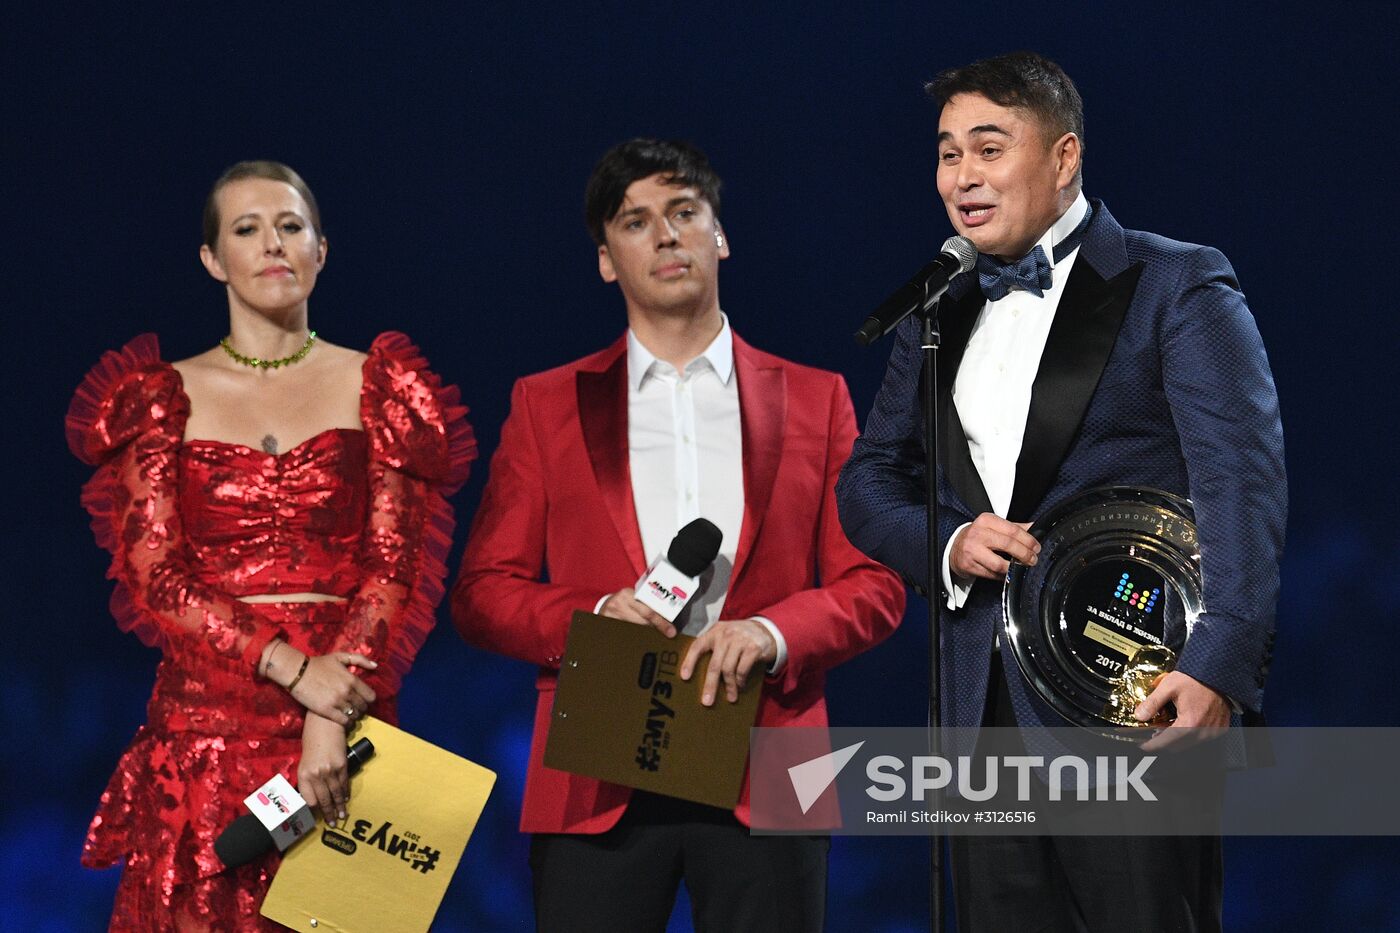 MUZ-TV 2017 national television awards